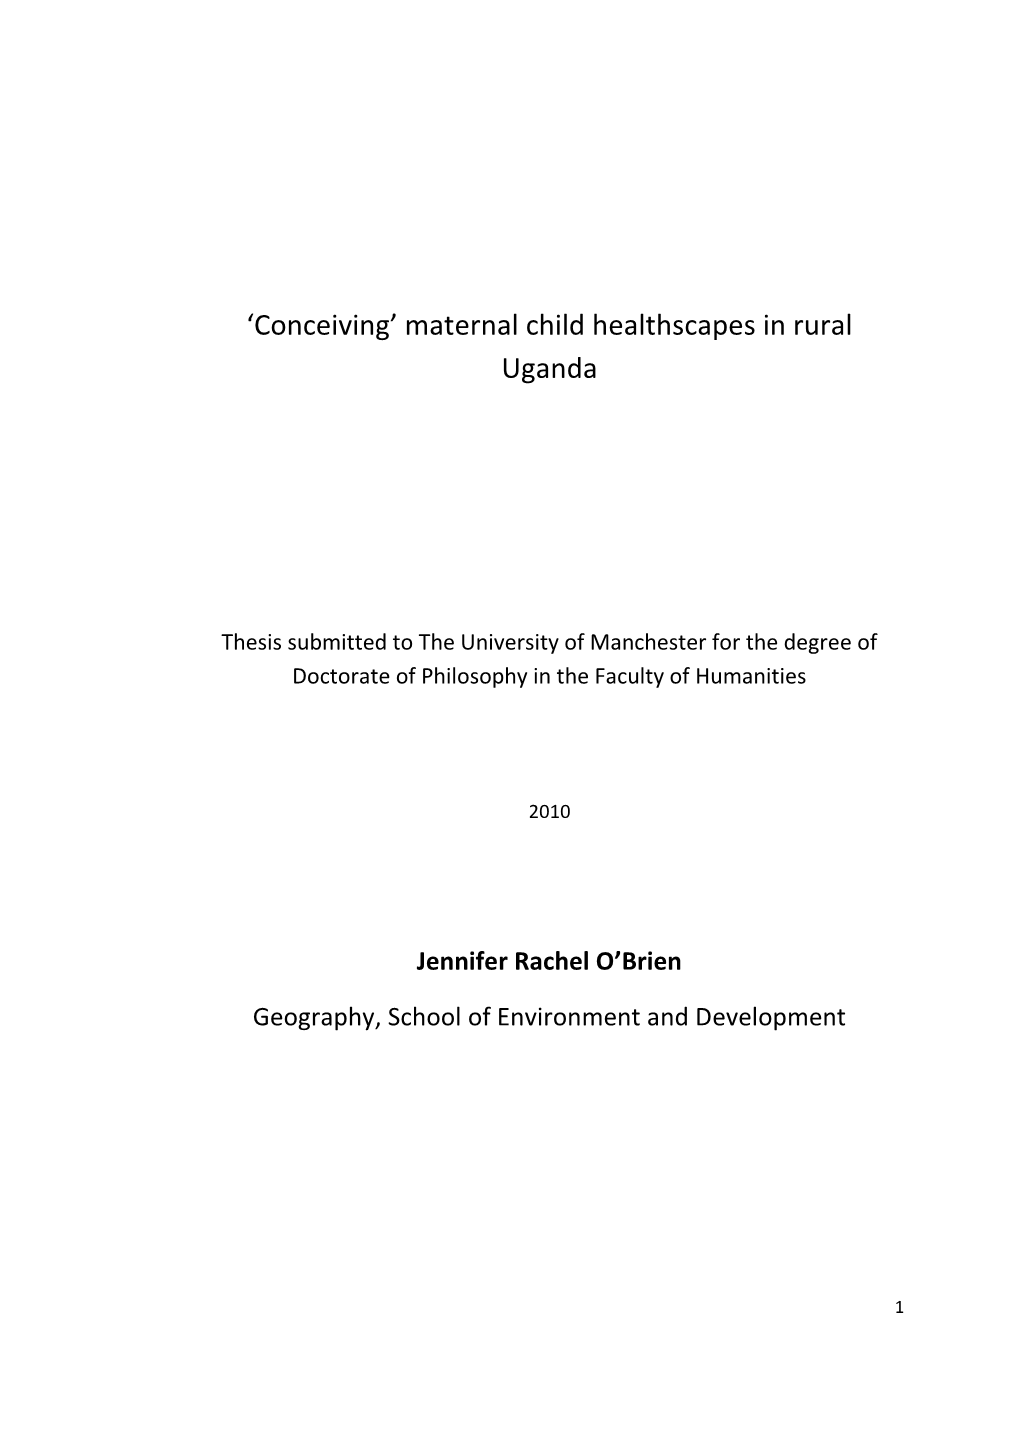 'Conceiving' Maternal Child Healthscapes in Rural Uganda